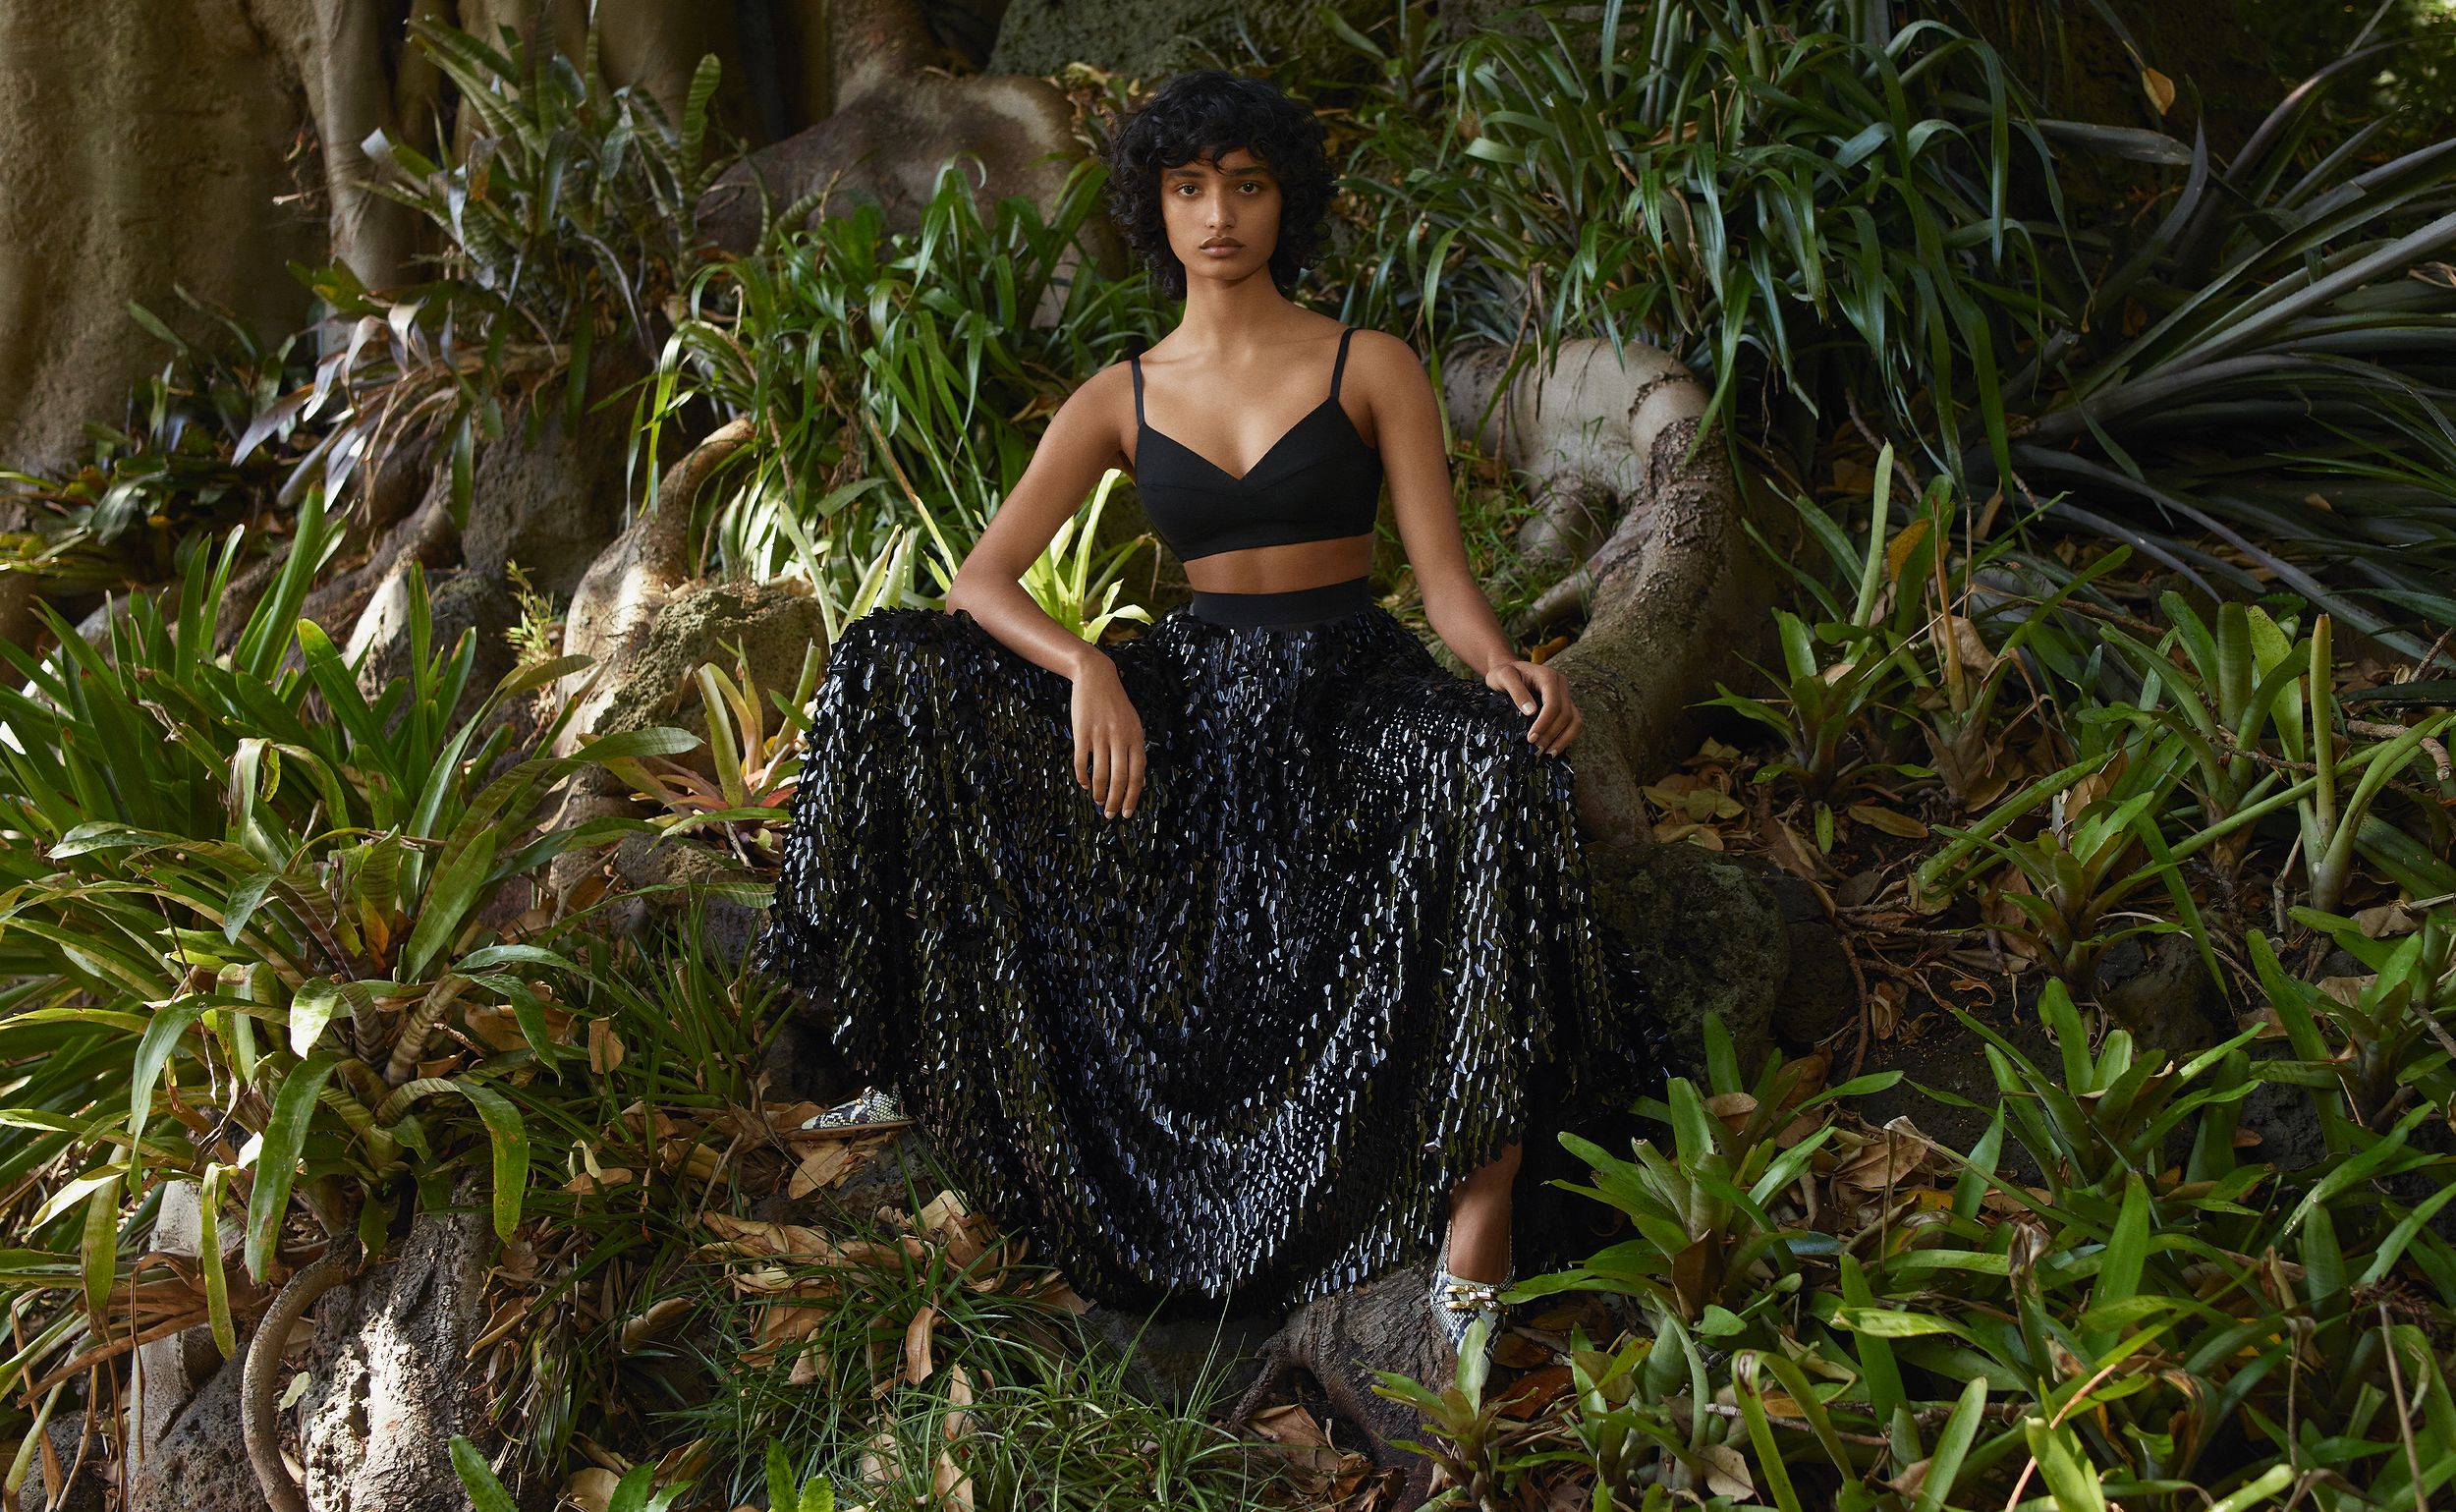 Model sitting amongst greenery wearing a black bralette and black sequined floor-length skirt